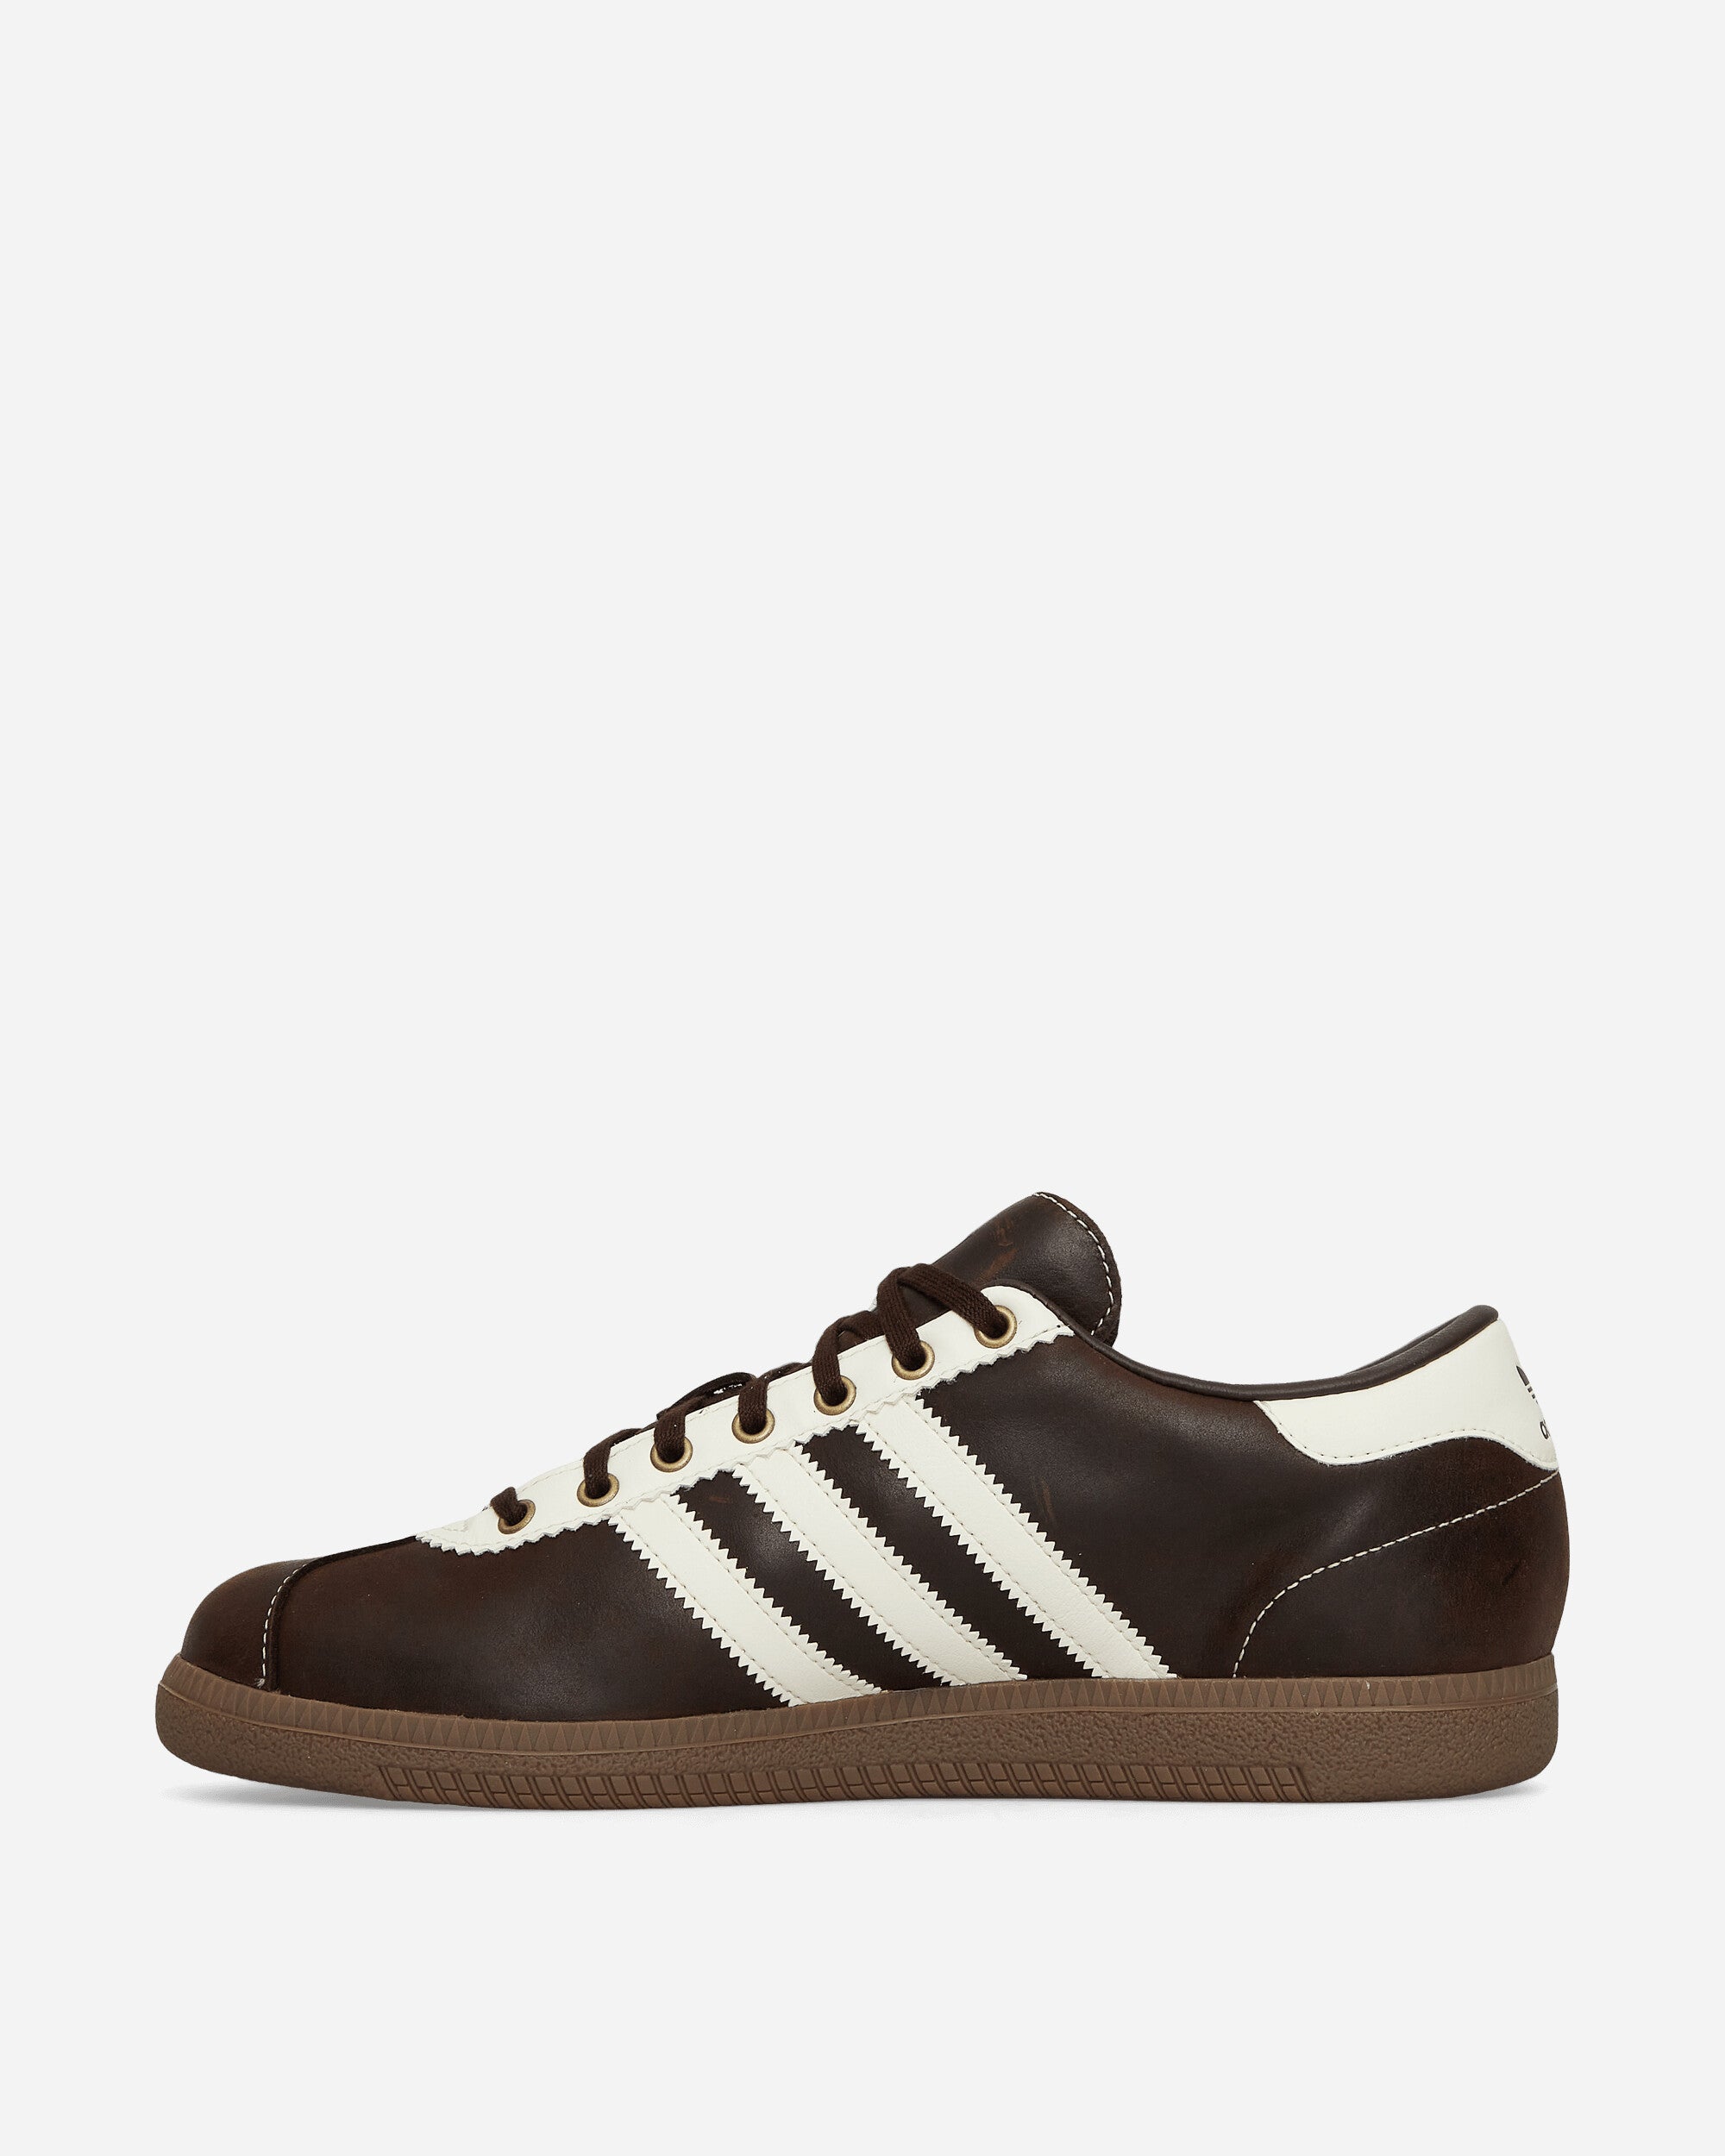 adidas Bern Gtx Dark Brown/Cream White Sneakers Low IF3800 001